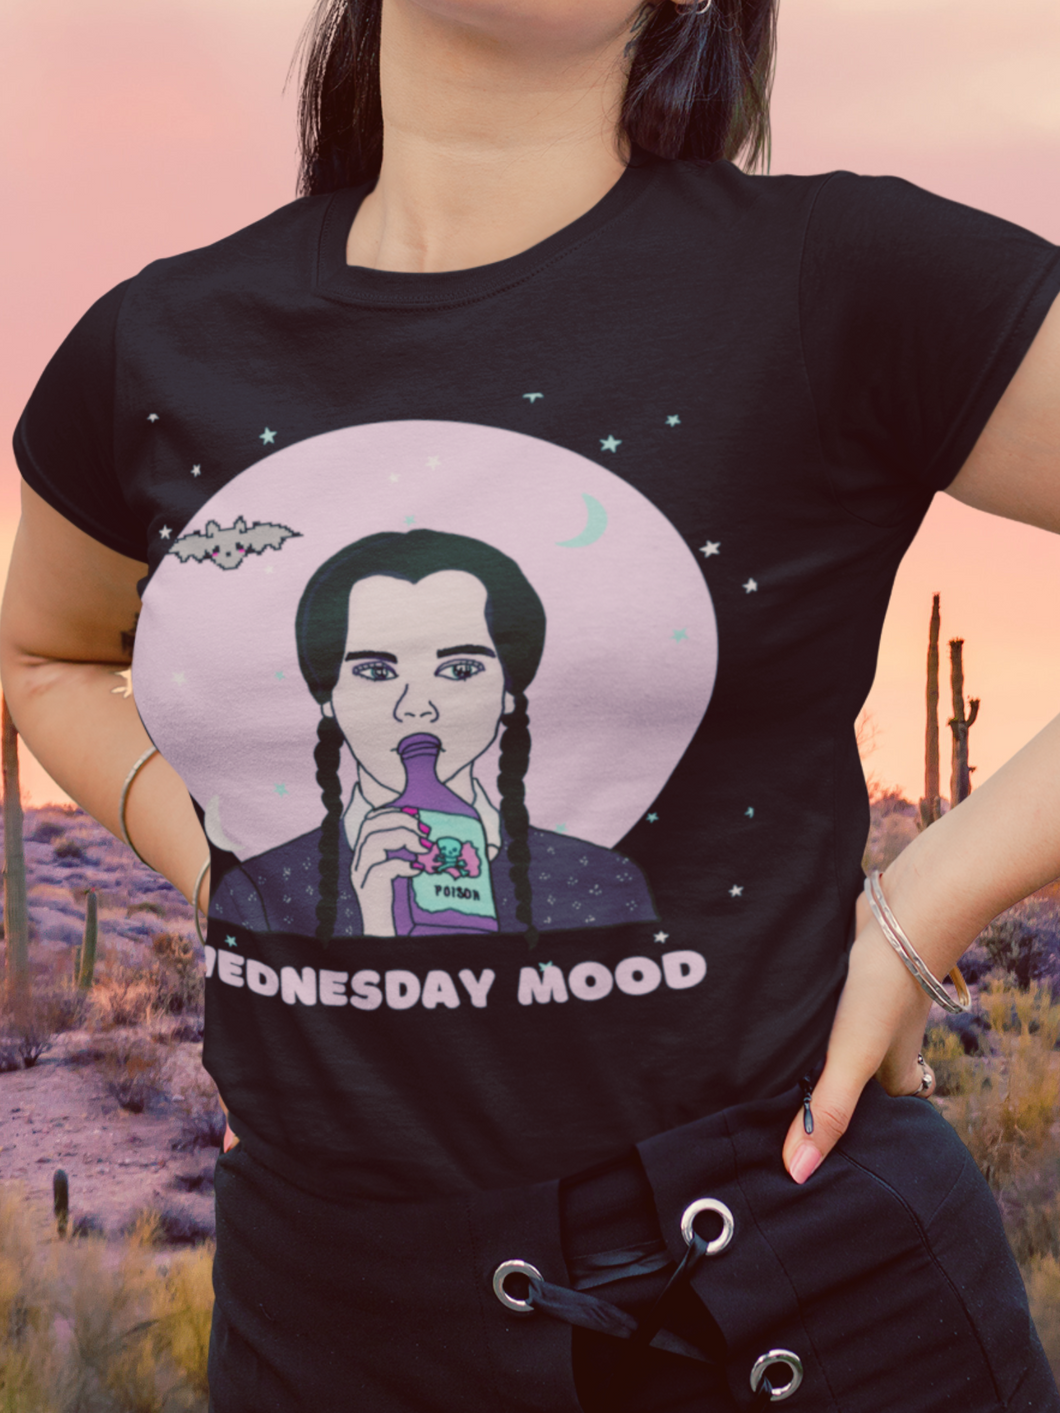 “Wednesday Mood” Wednesday Addams Super Soft T-shirt